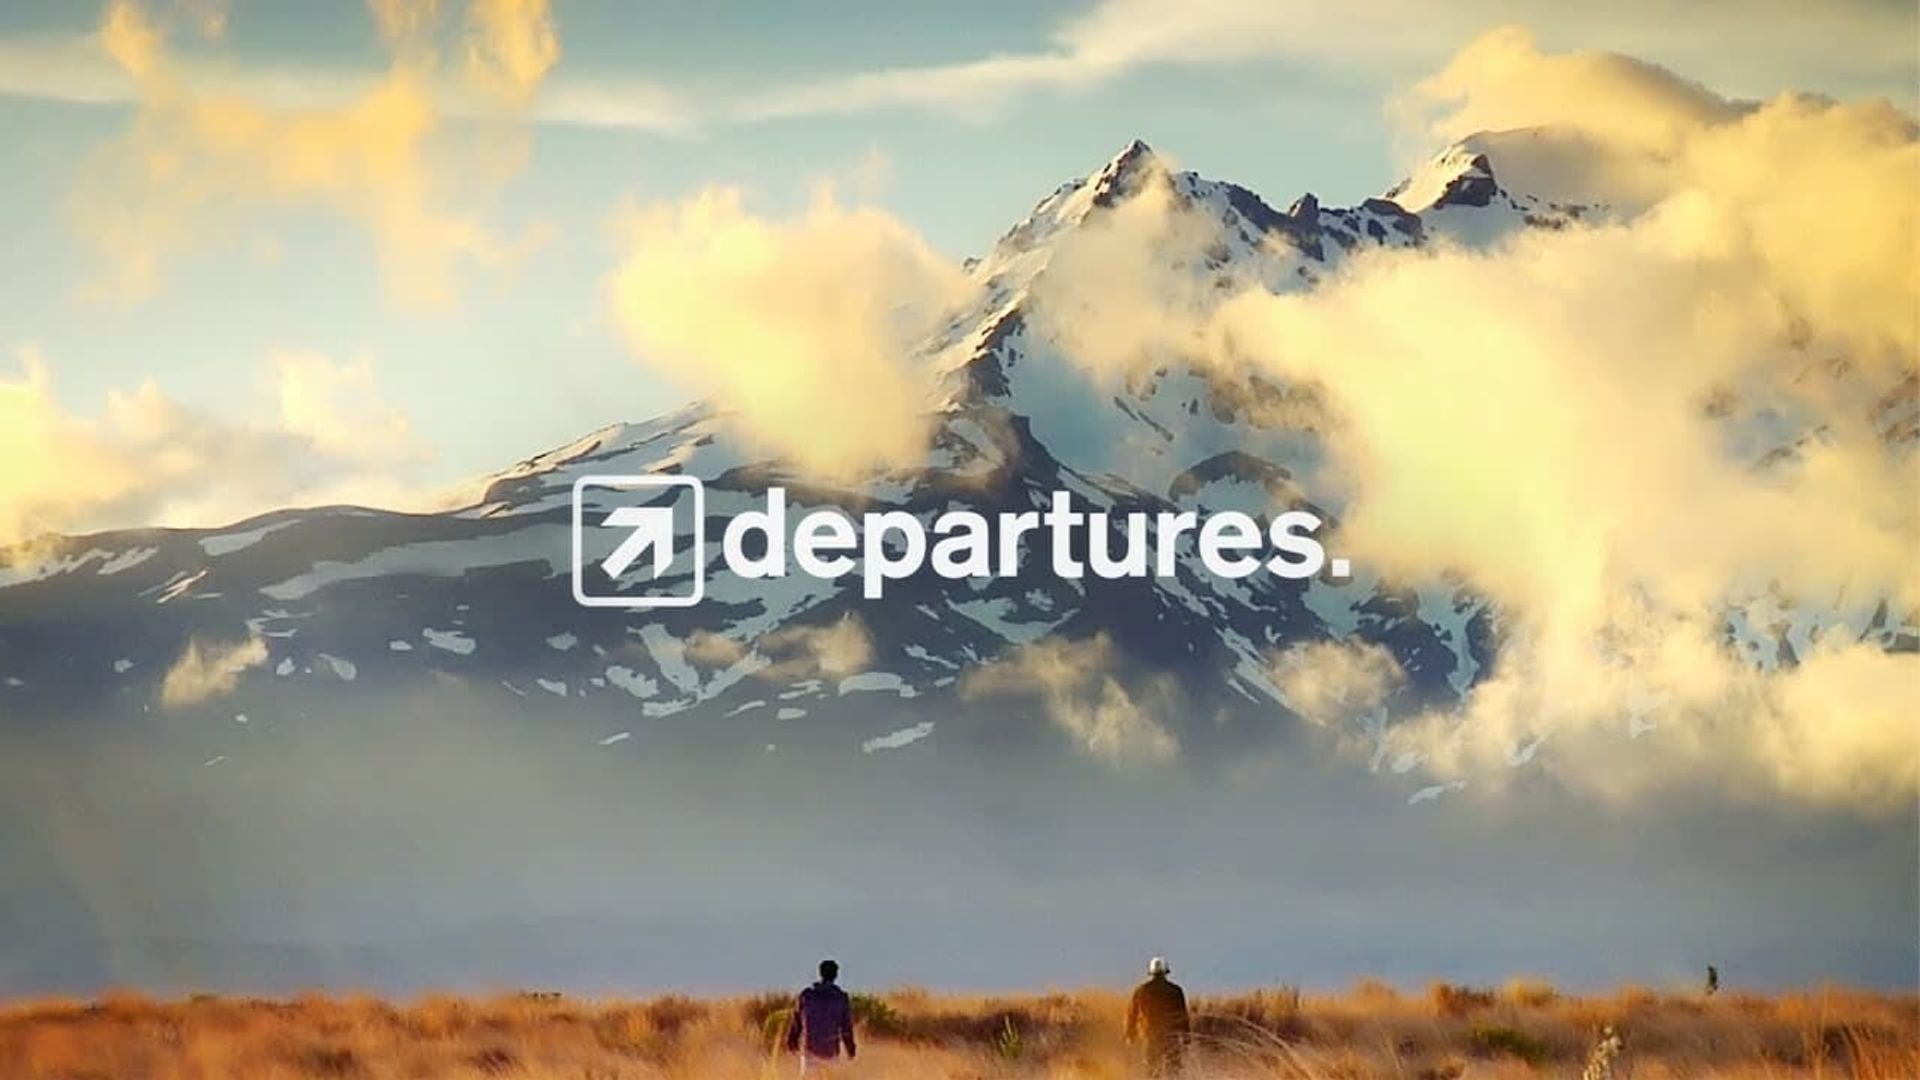 Departures background